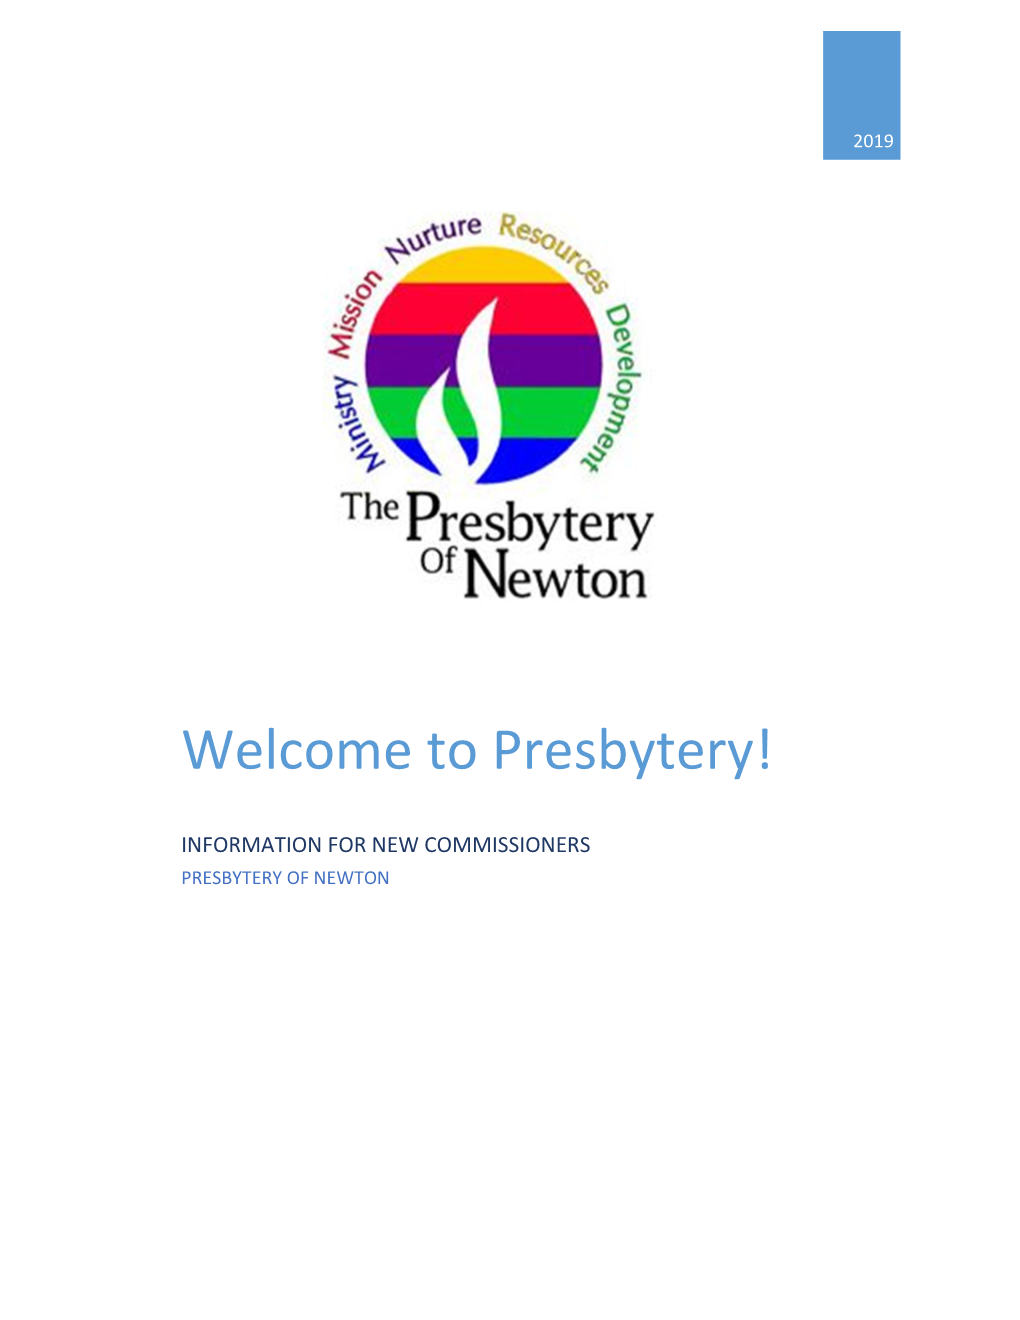 Welcome to Presbytery!